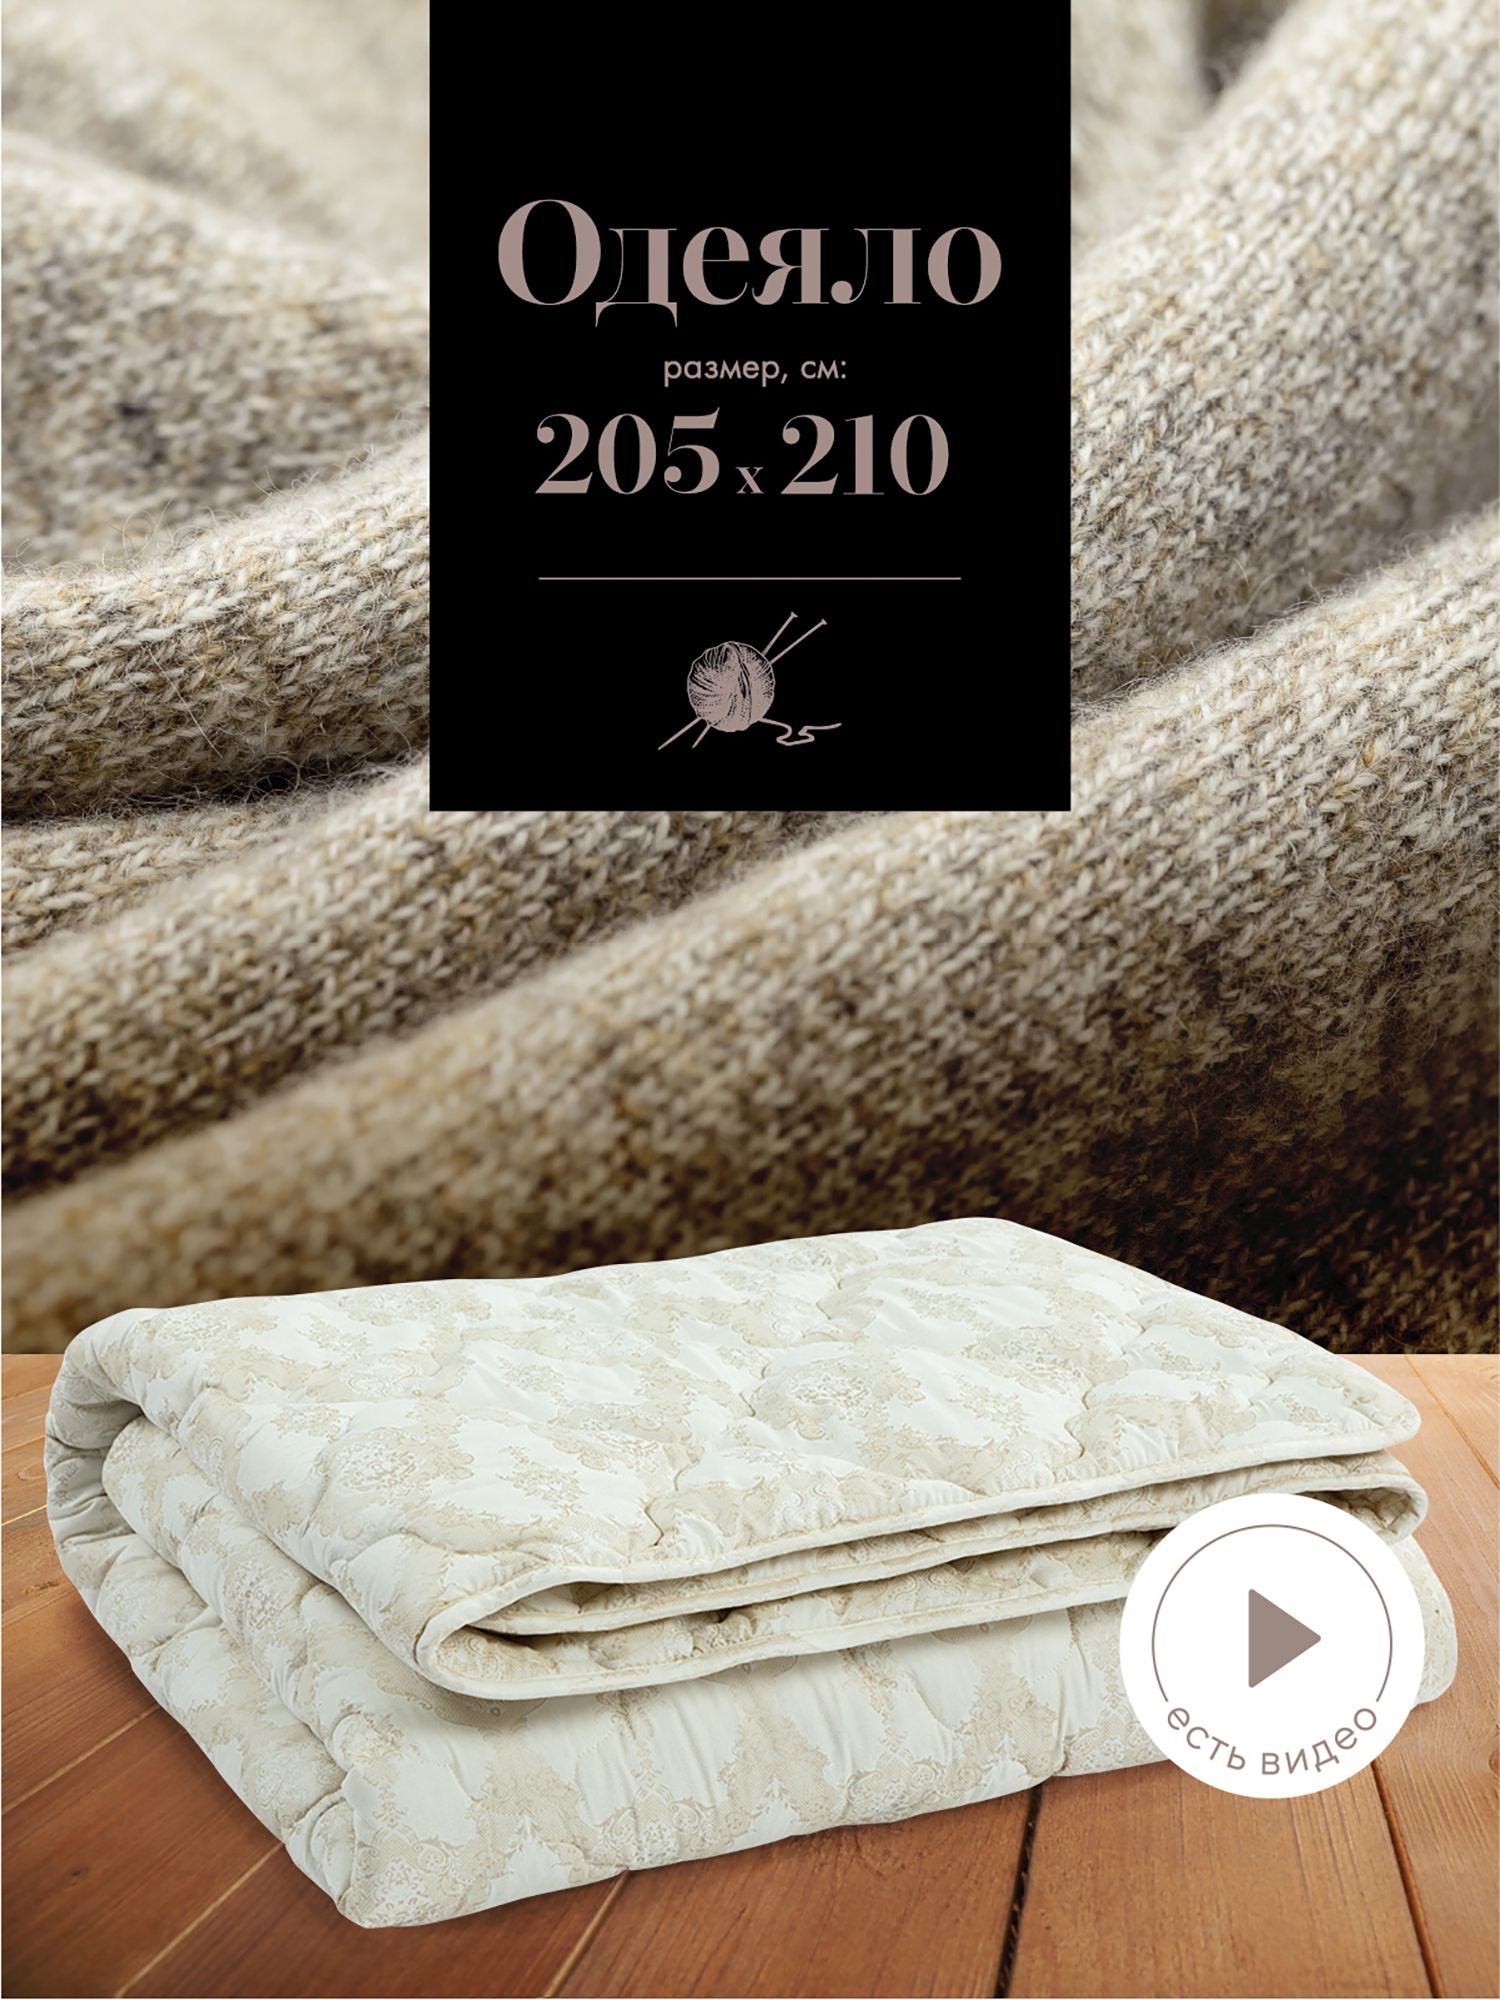 Одеяло шерстяное Mia Cara Bellasonno 210x205 овечья шерсть